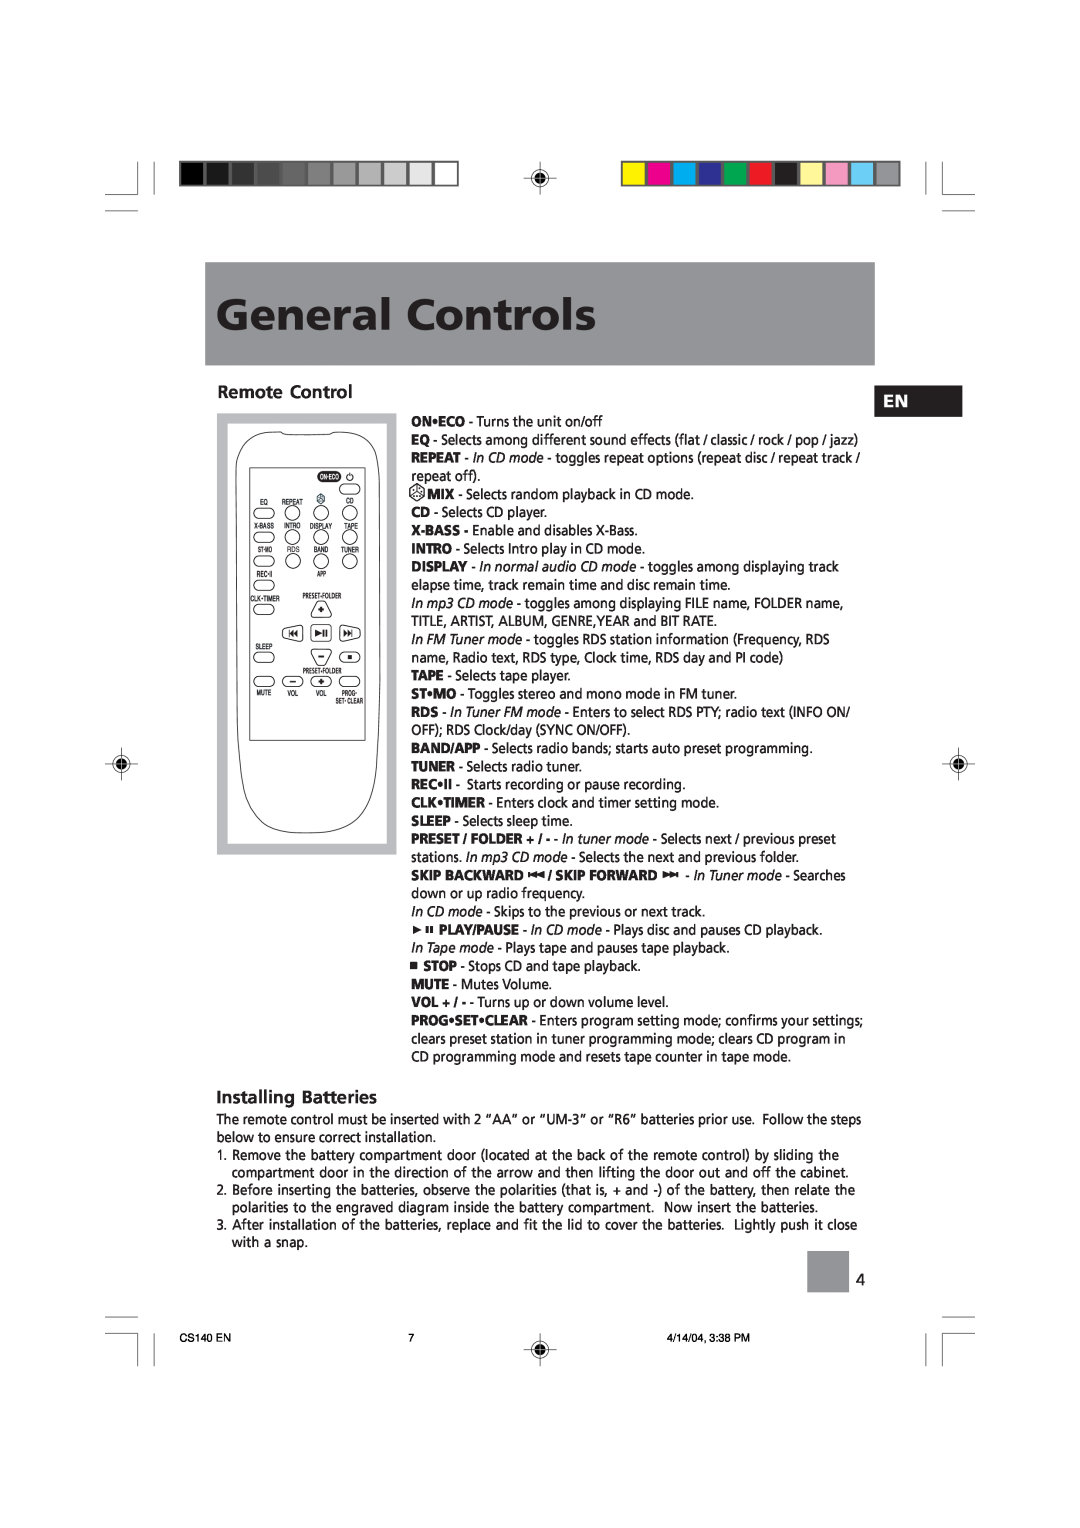 Technicolor - Thomson CS140 user service Remote Control, Installing Batteries, General Controls 